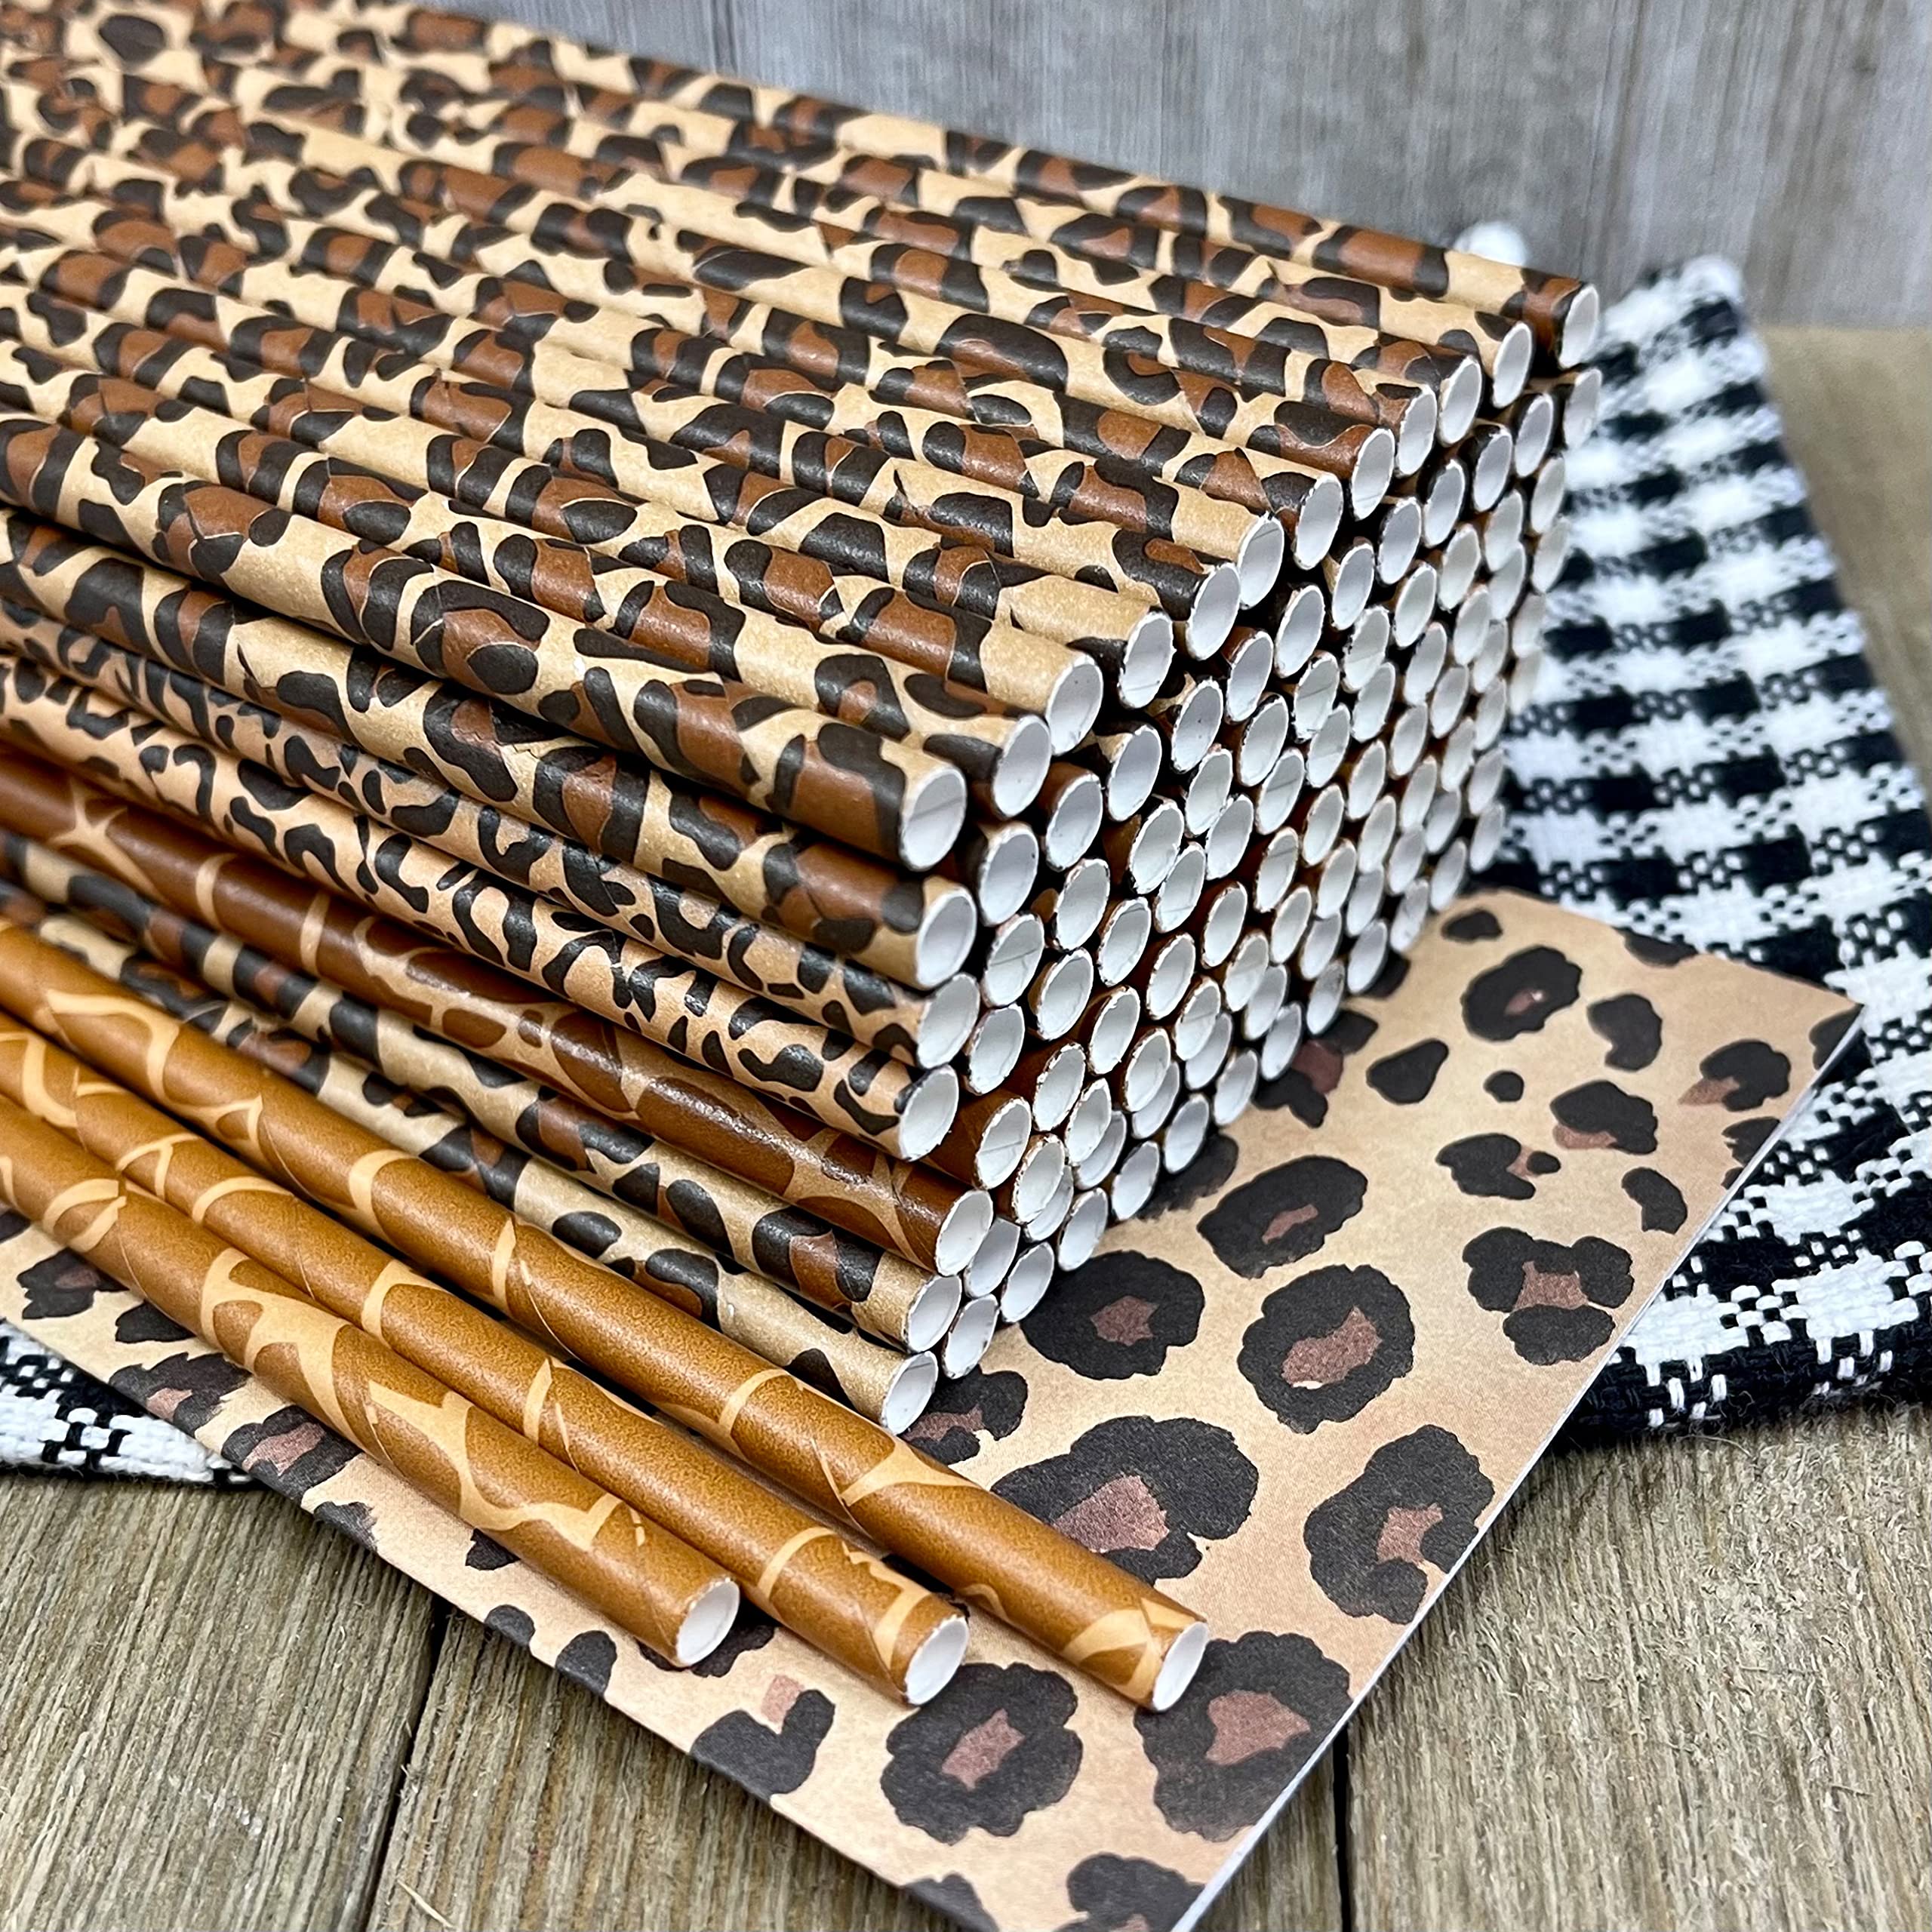 Animal Print Paper Straws - Safari Theme - Leopard Giraffe Cheetah Print - Black Brown Tan - 100 Pack Outside the Box Papers Brand